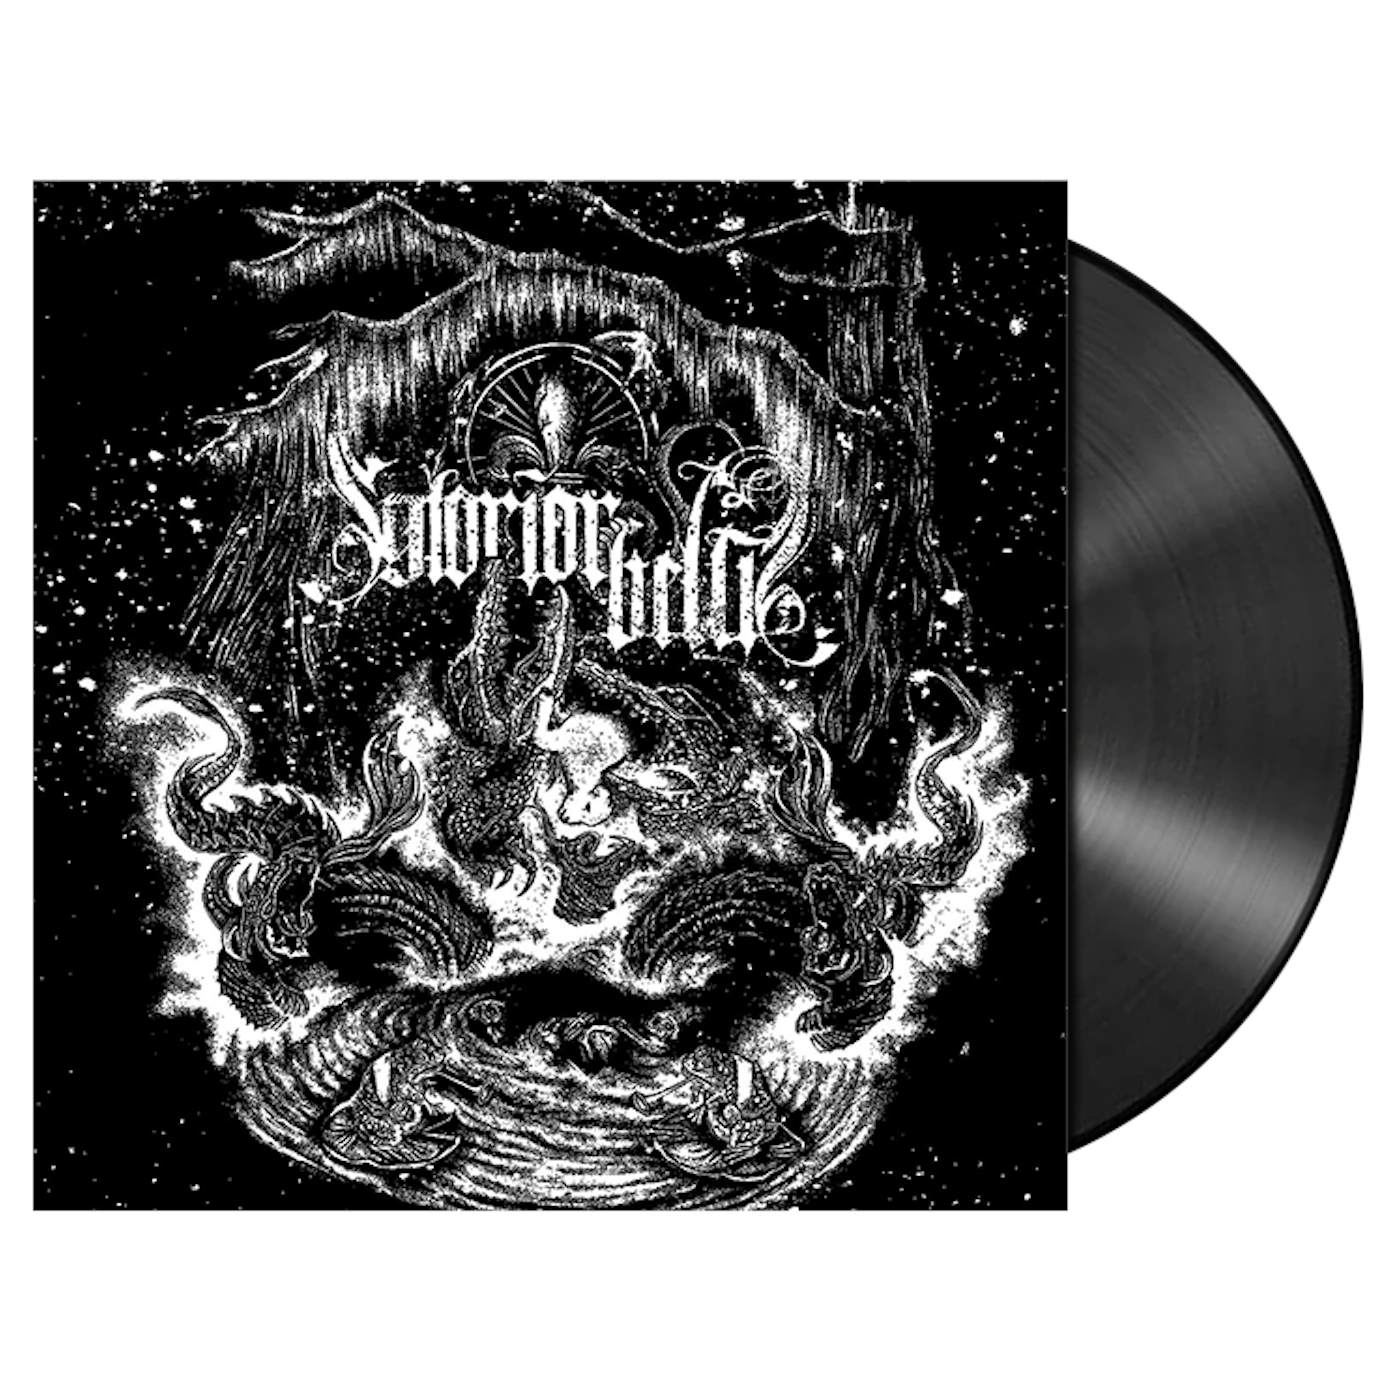 GLORIOR BELLI - 'Gators Rumble, Chaos Unfurls' LP (Vinyl)